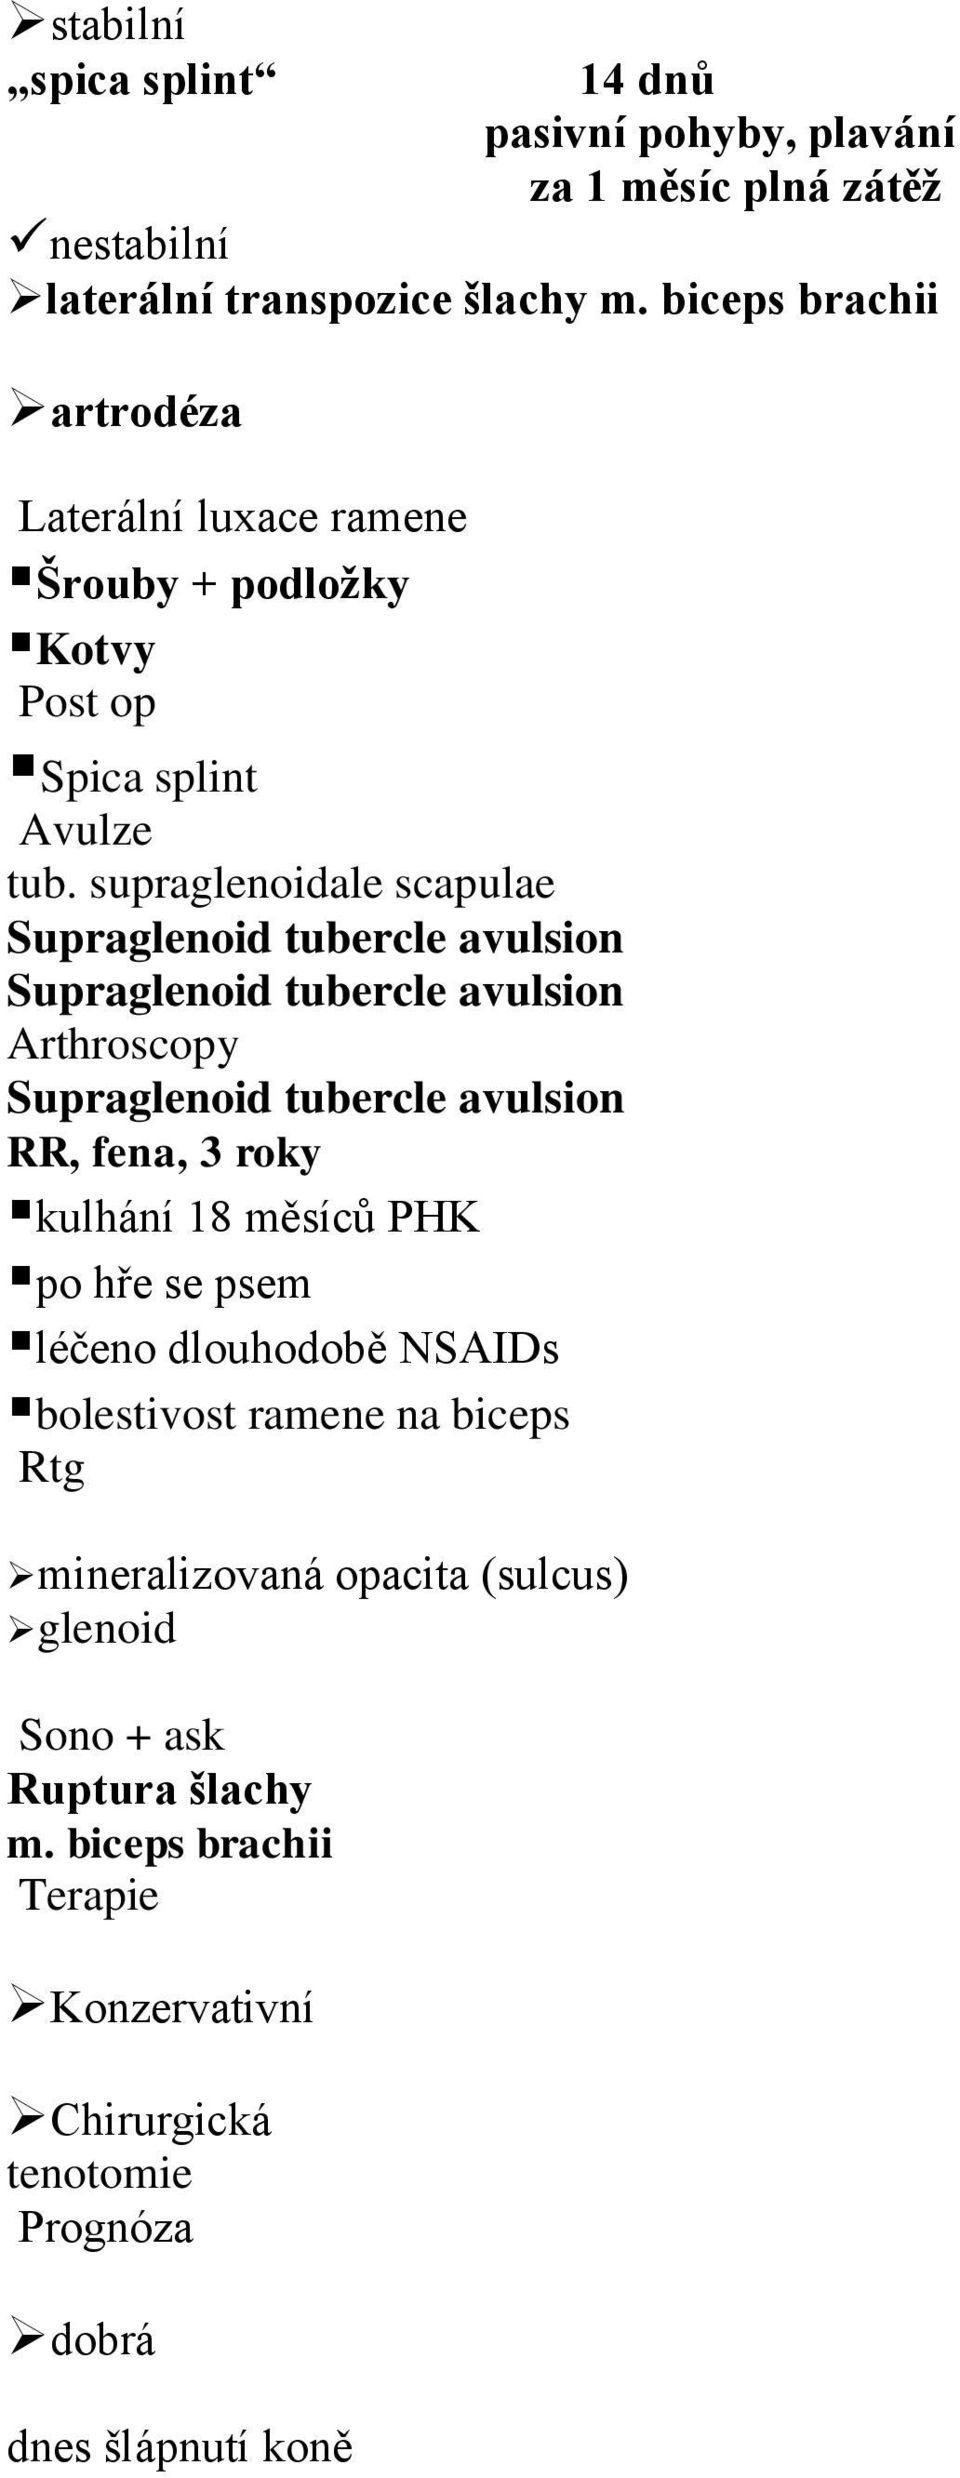 supraglenoidale scapulae Supraglenoid tubercle avulsion Supraglenoid tubercle avulsion Supraglenoid tubercle avulsion RR, fena, 3 roky kulhání 18